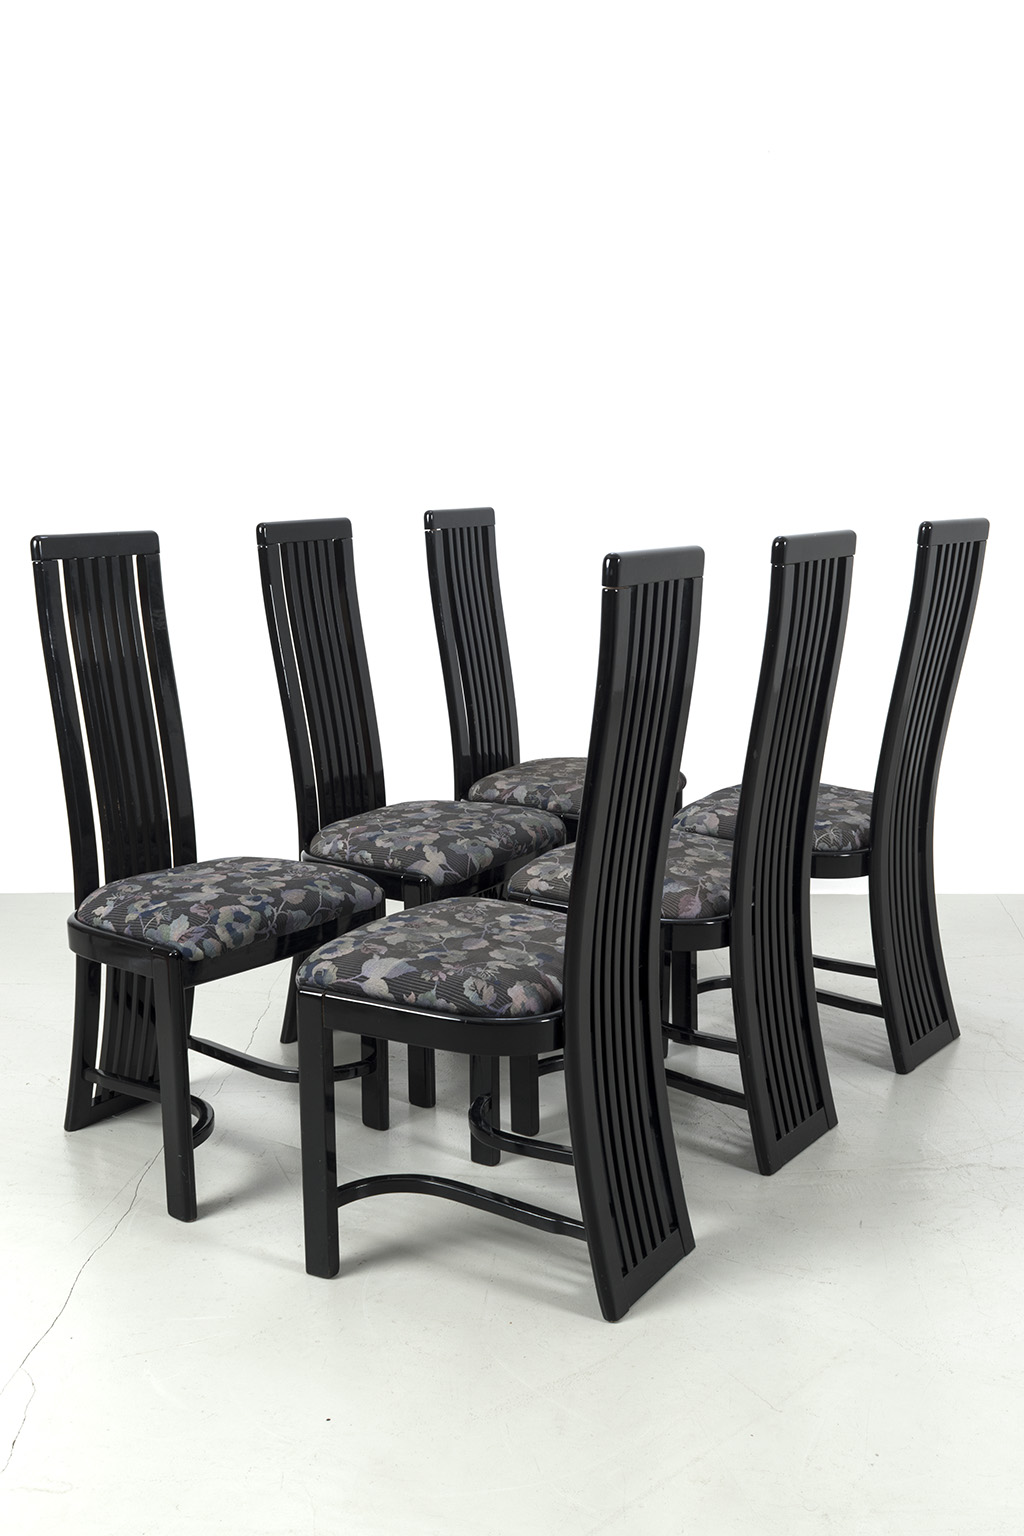 Set zwarte stoelen in Italiaanse stijl.